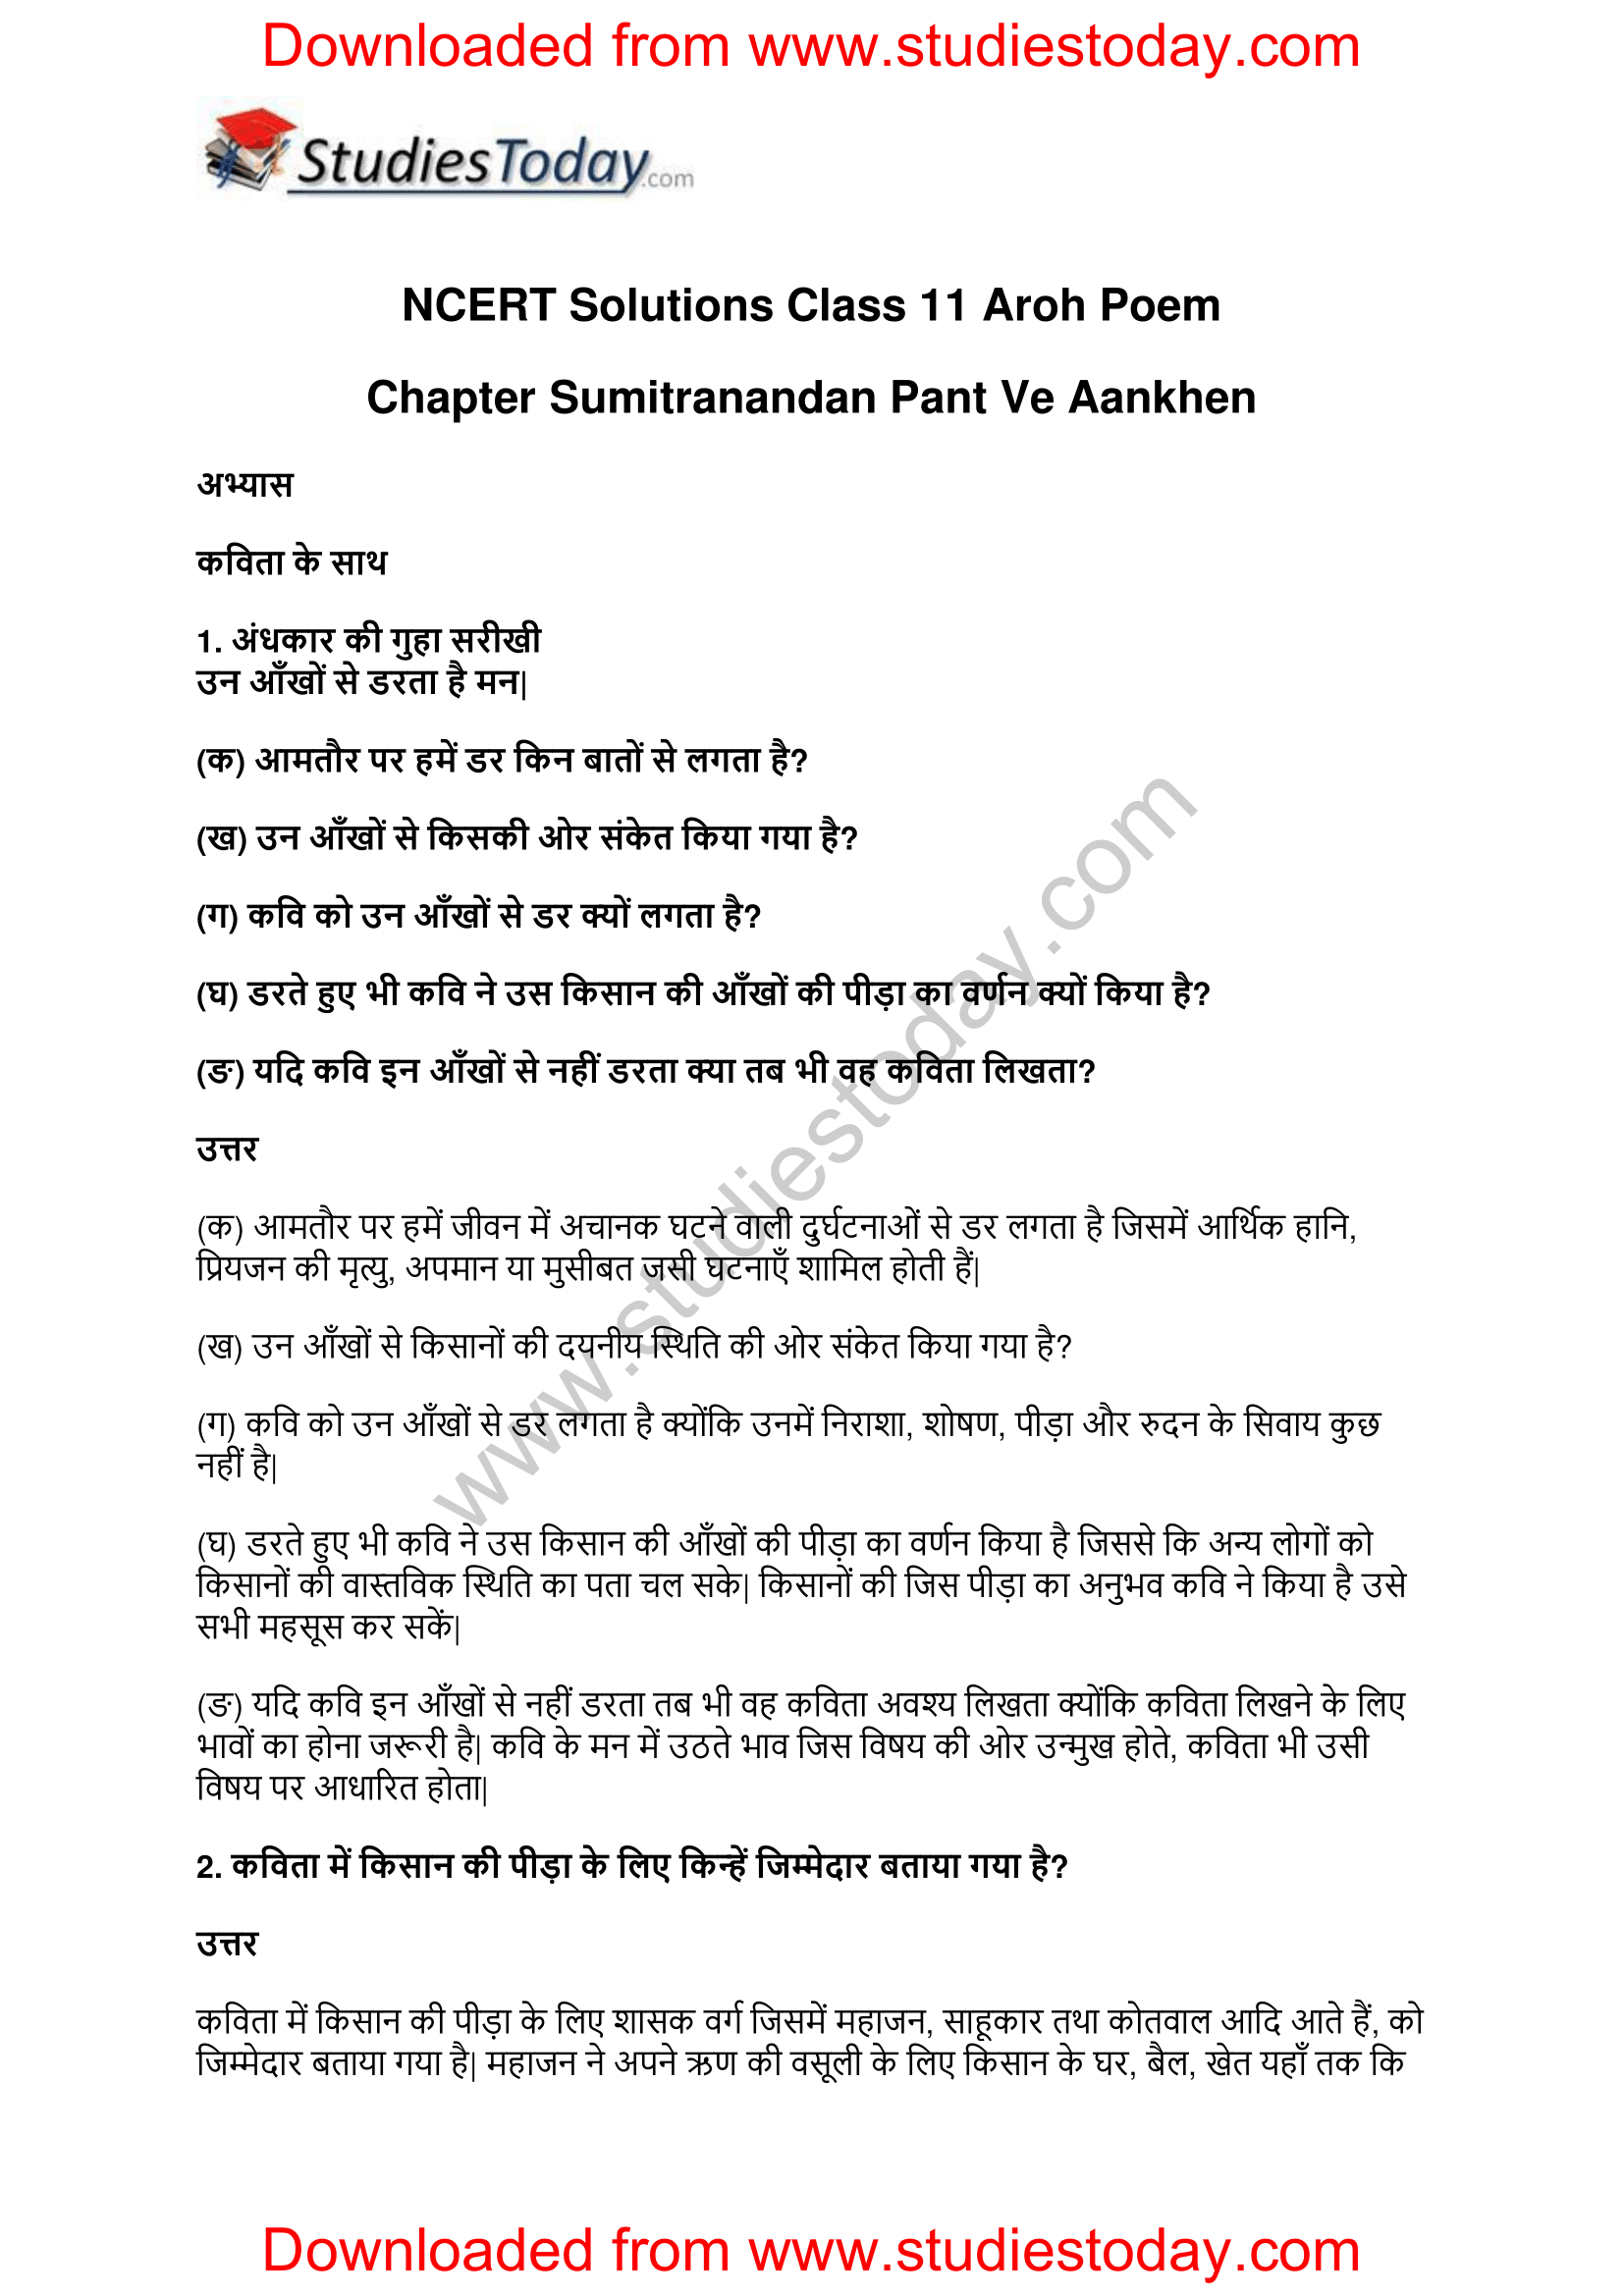 NCERT-Solutions-Class-11-Hindi-Aroh-Poem-Sumitranandan-Pant-1